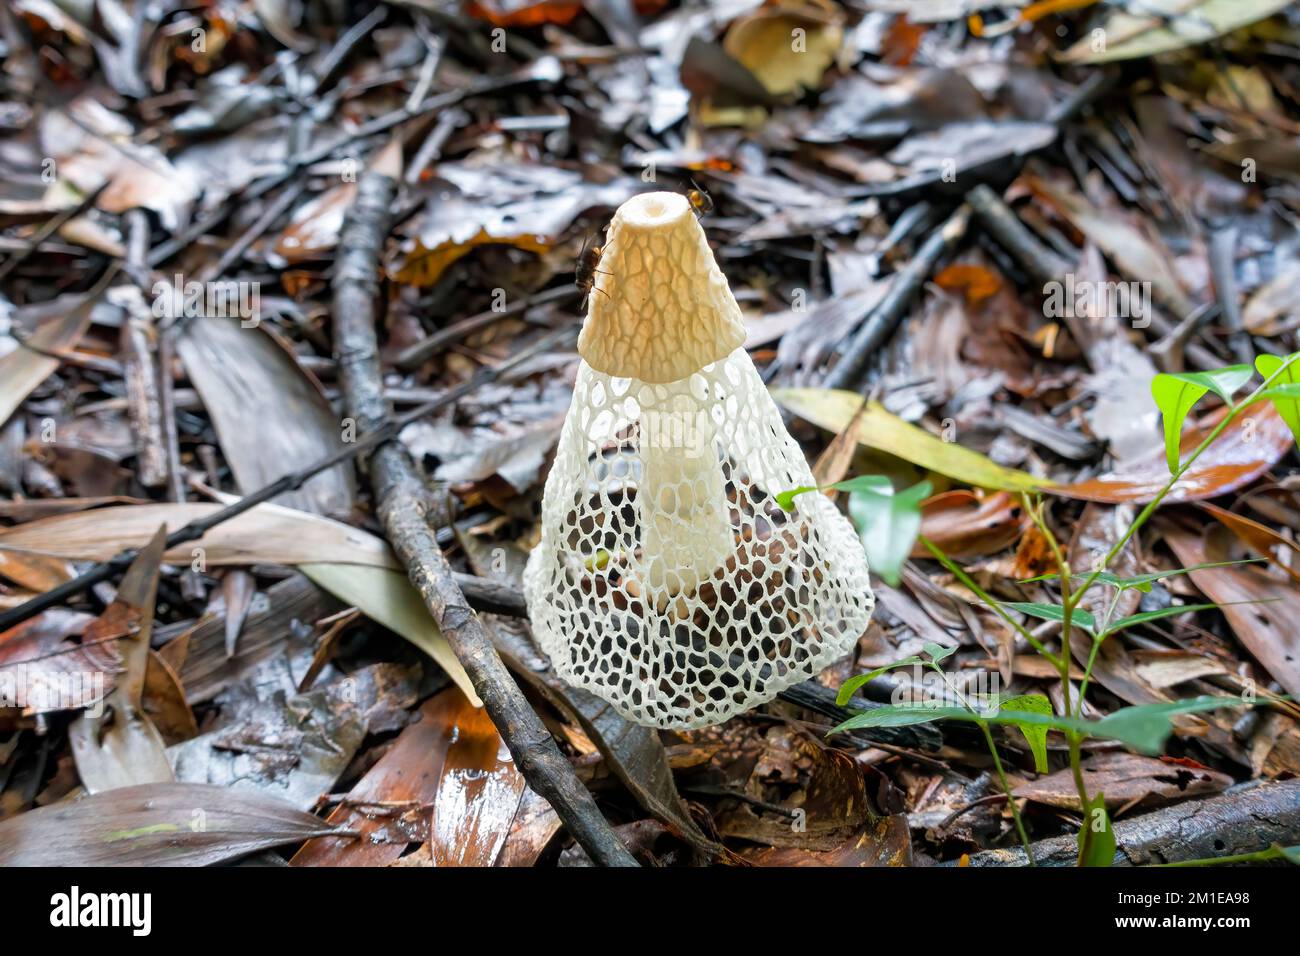 Phallus multicolor also known as a stinkhorn fungi, a tropical species, near Kuranda in Tropical North Queensland, Australia Stock Photo